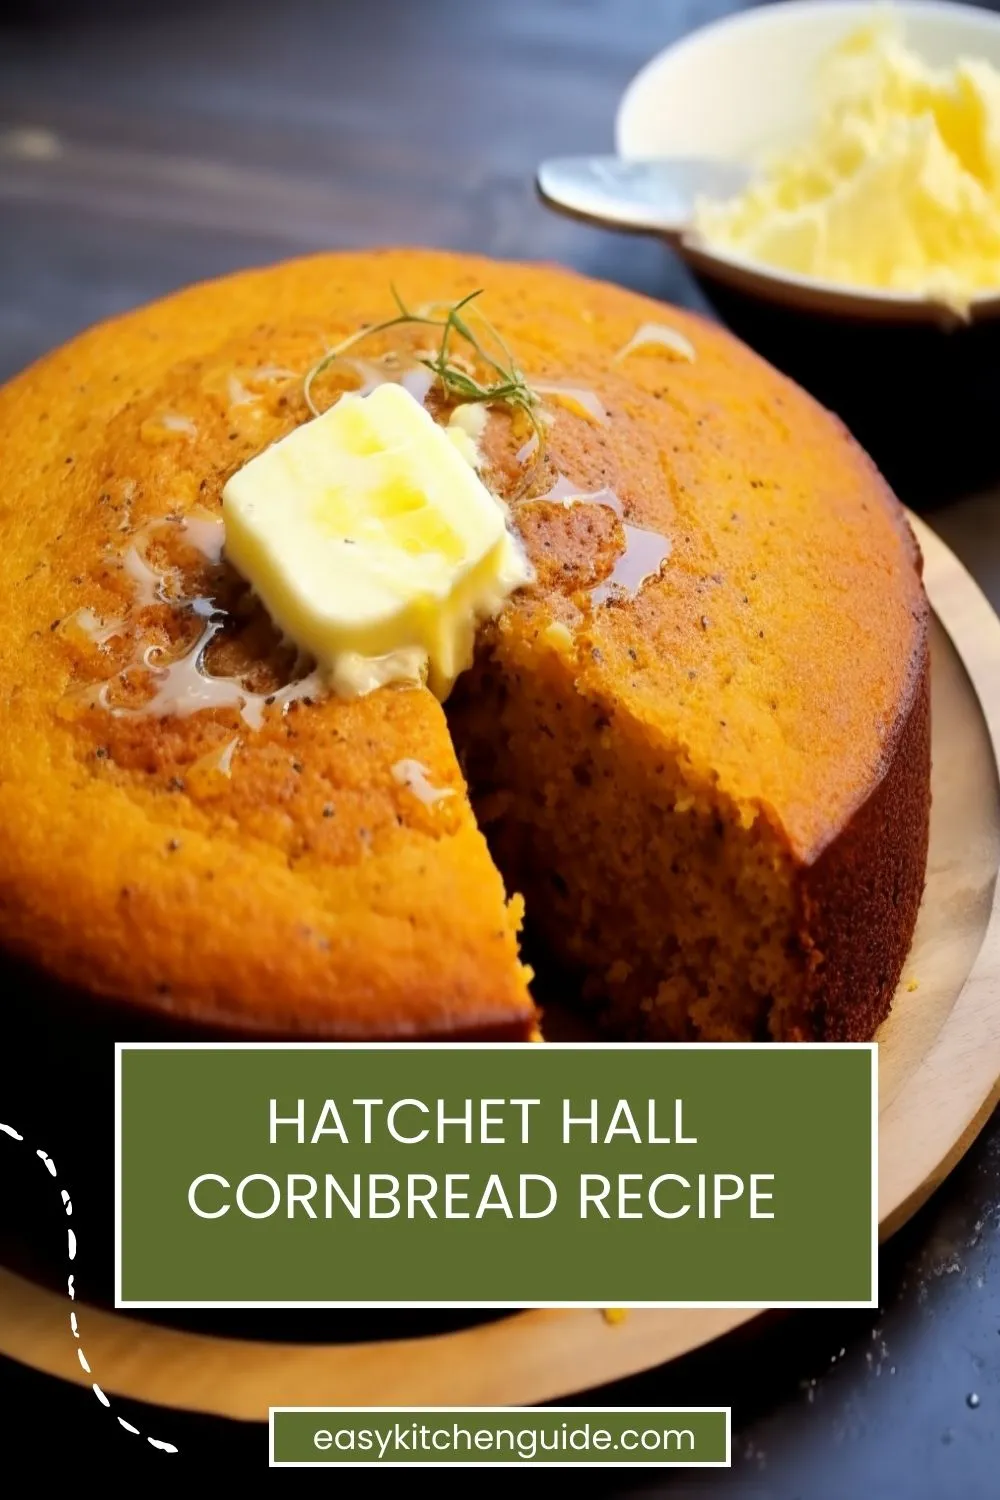 Hatchet Hall Cornbread Recipe